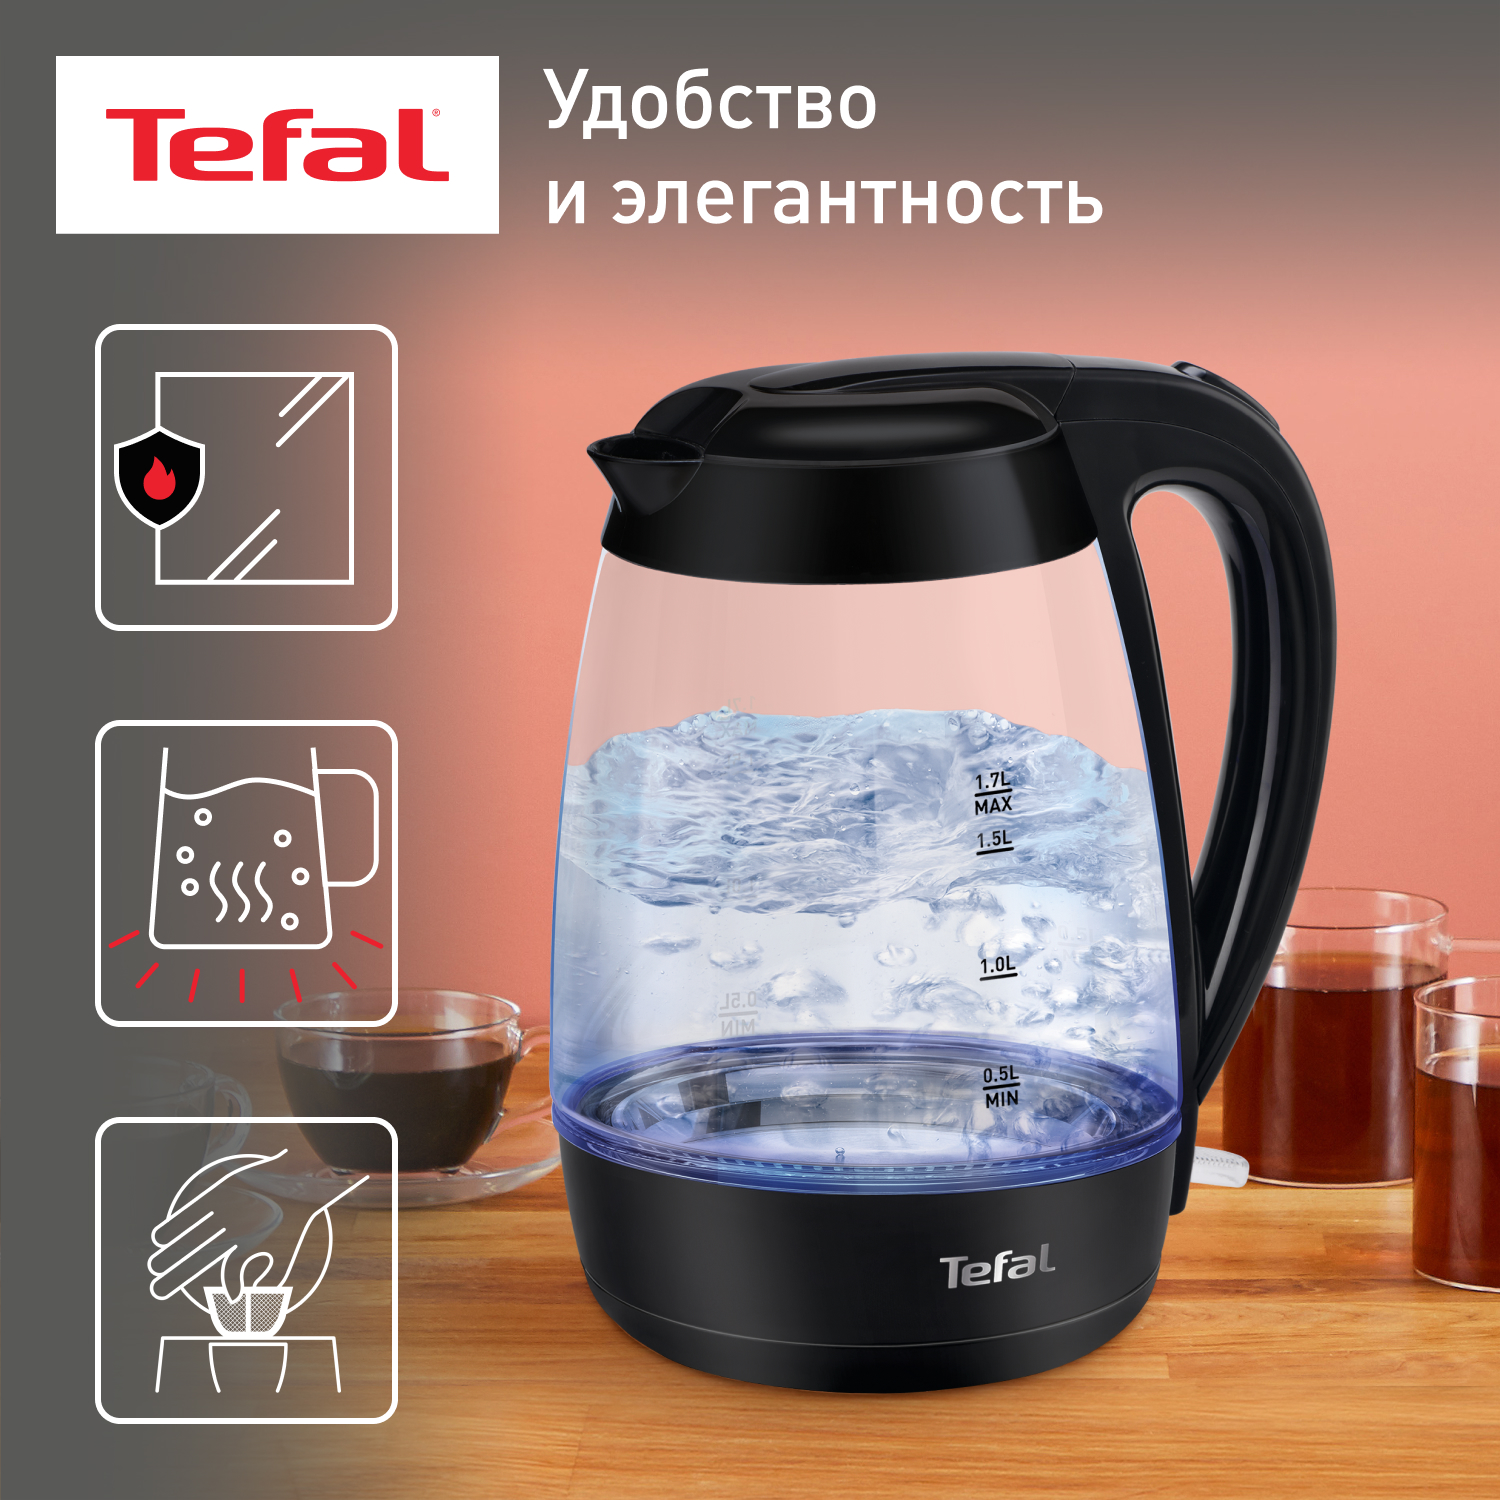 Чайник электрический Tefal Glass KO450832, 1.7 л, черный чайник электрический tefal glass ko450832 1 7 л